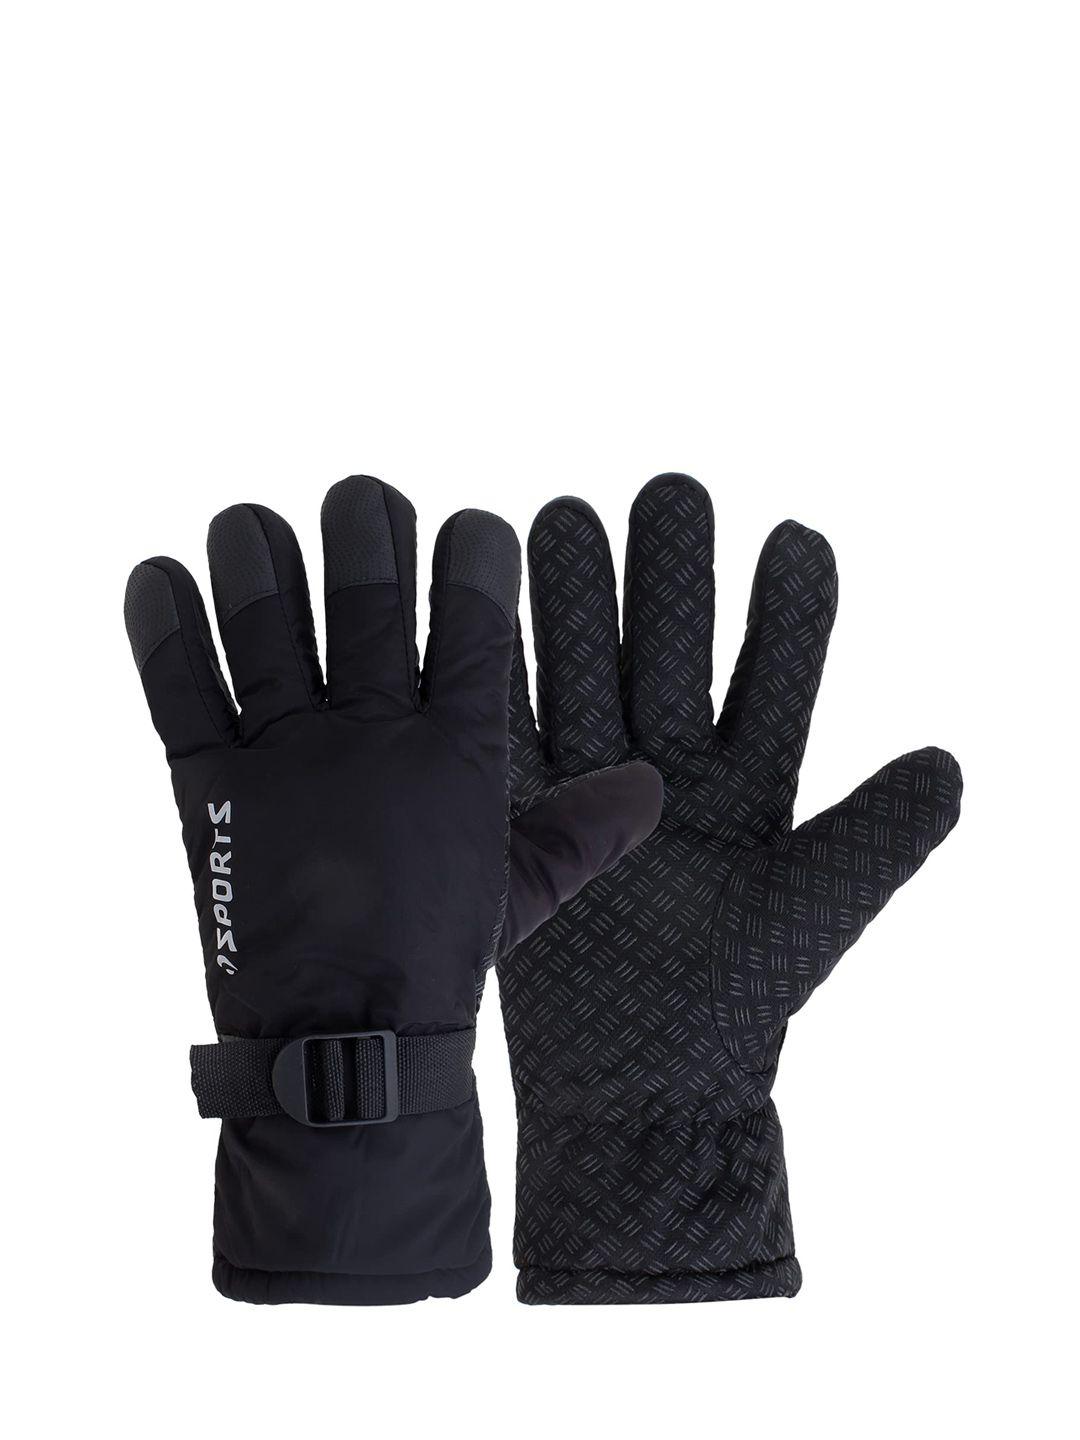 zacharias men patterned winter hand gloves